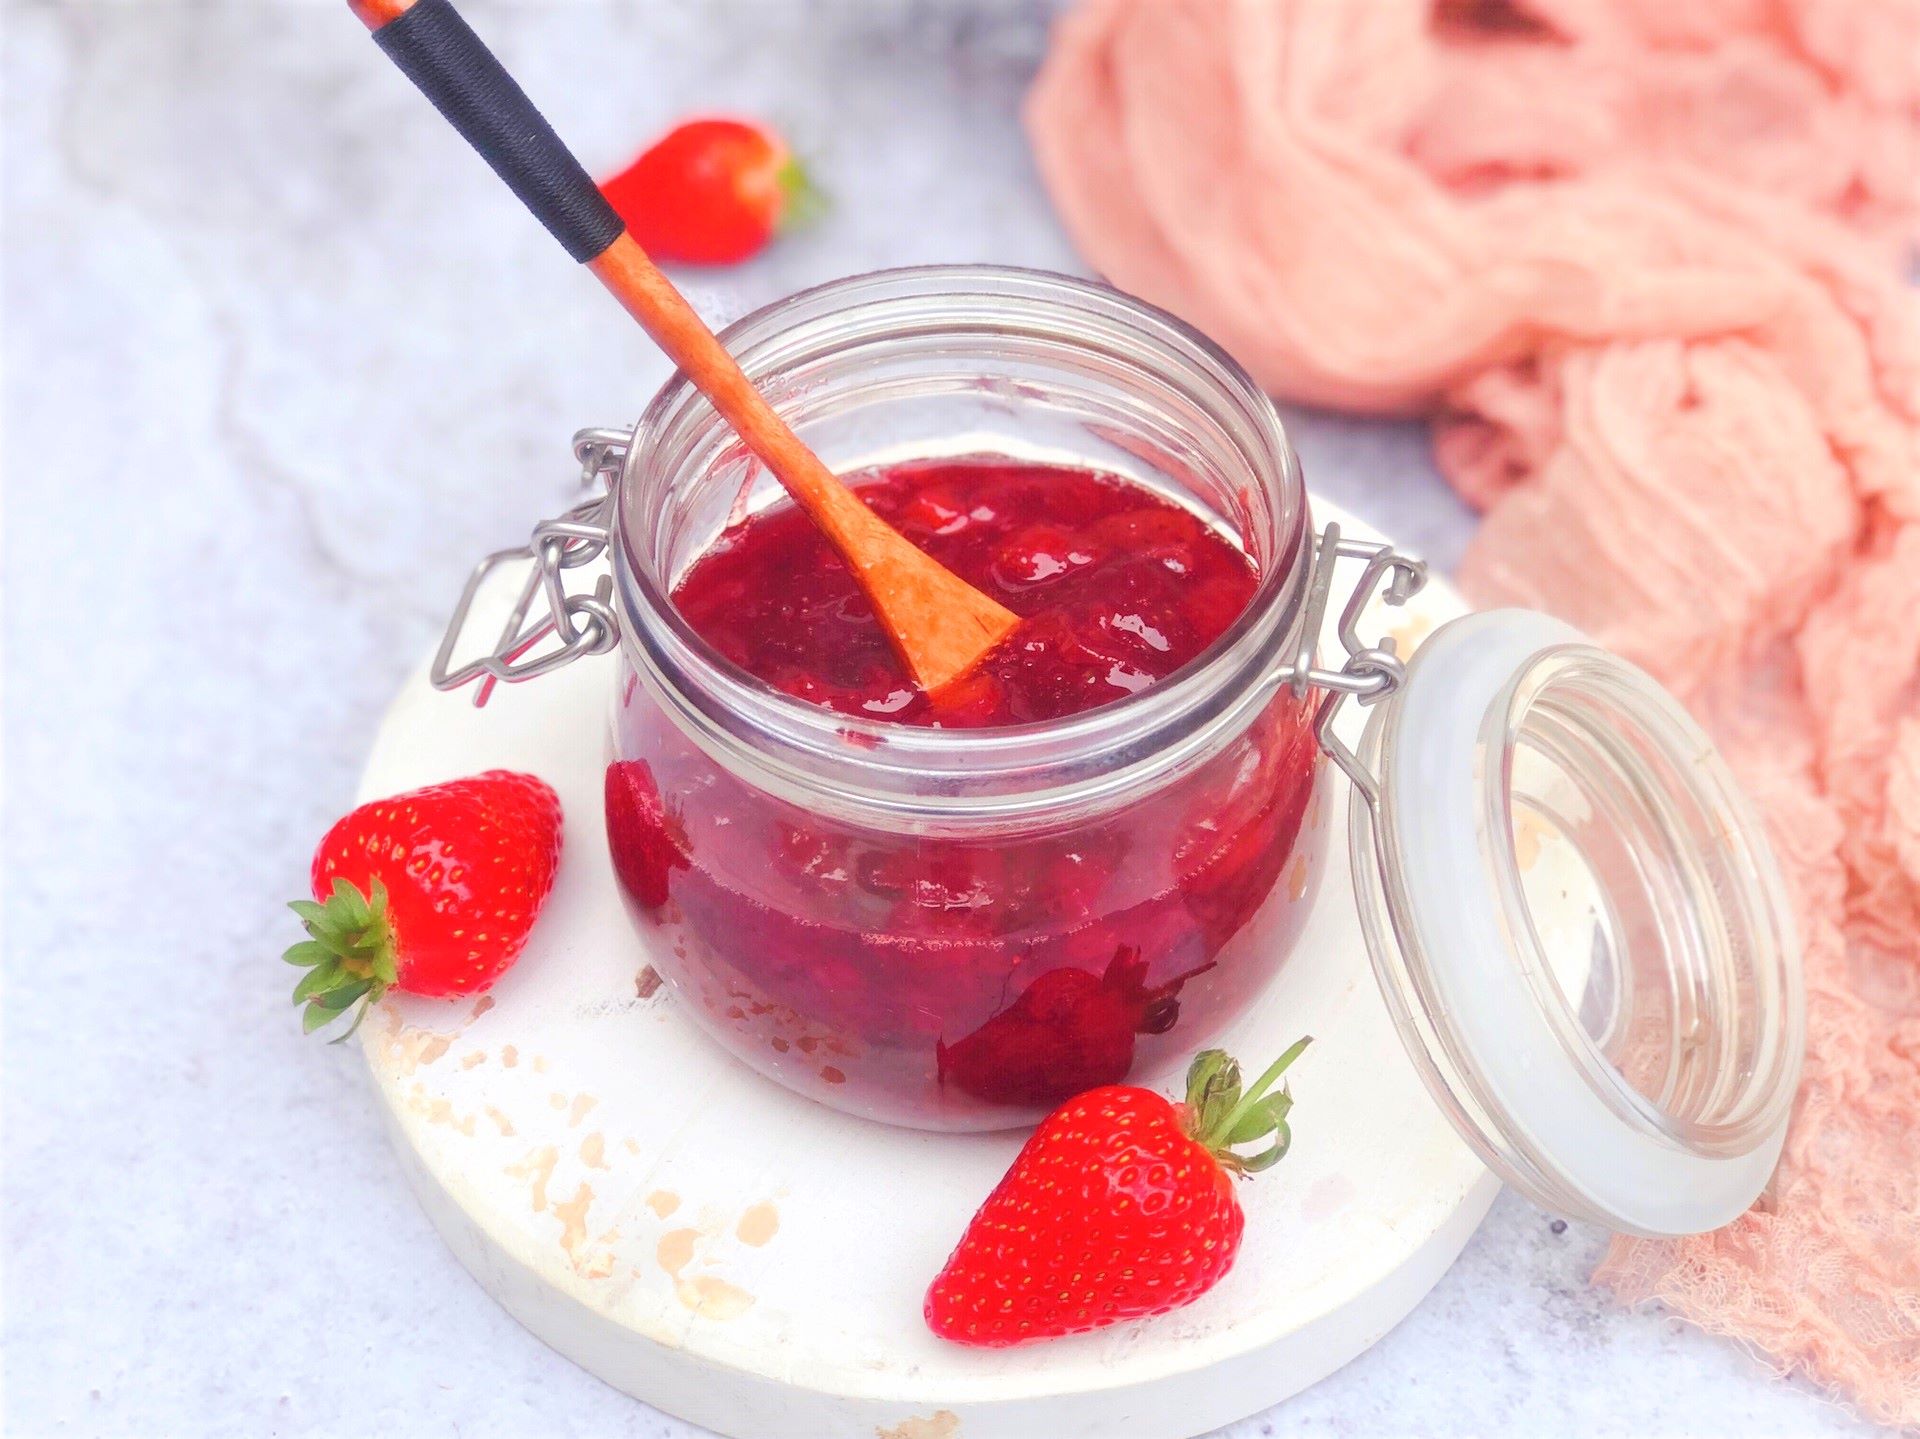 Homemade healthy strawberry jam